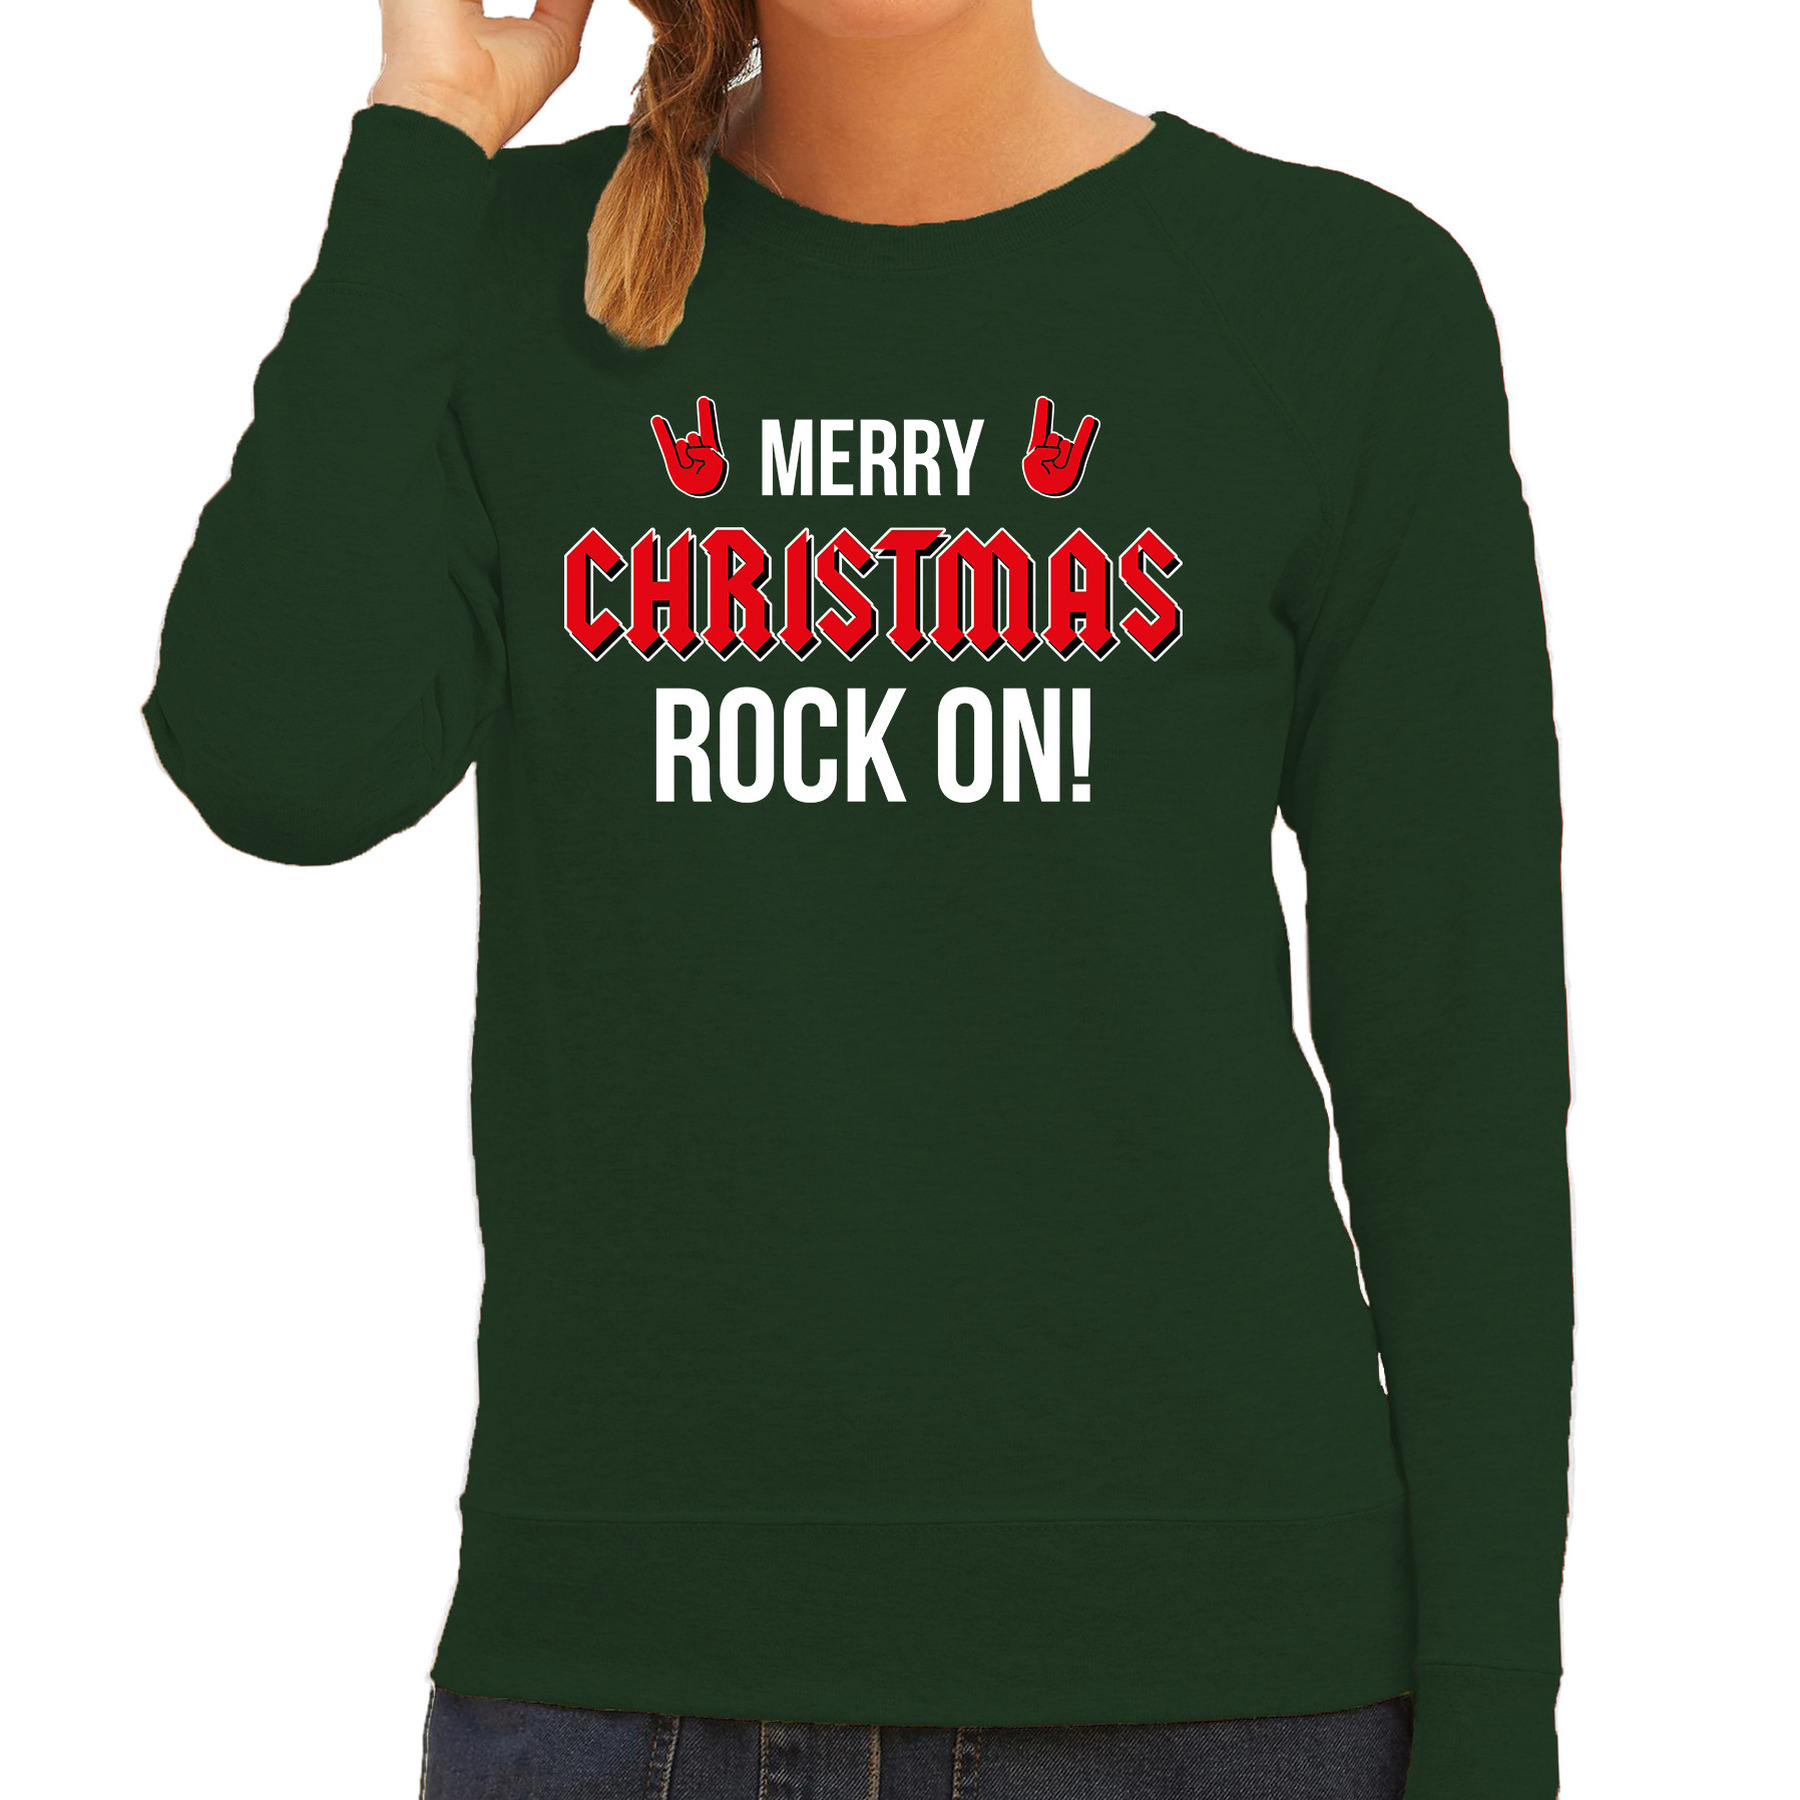 Merry Christmas Rock on foute Kerstsweater-Kersttrui groen voor dames